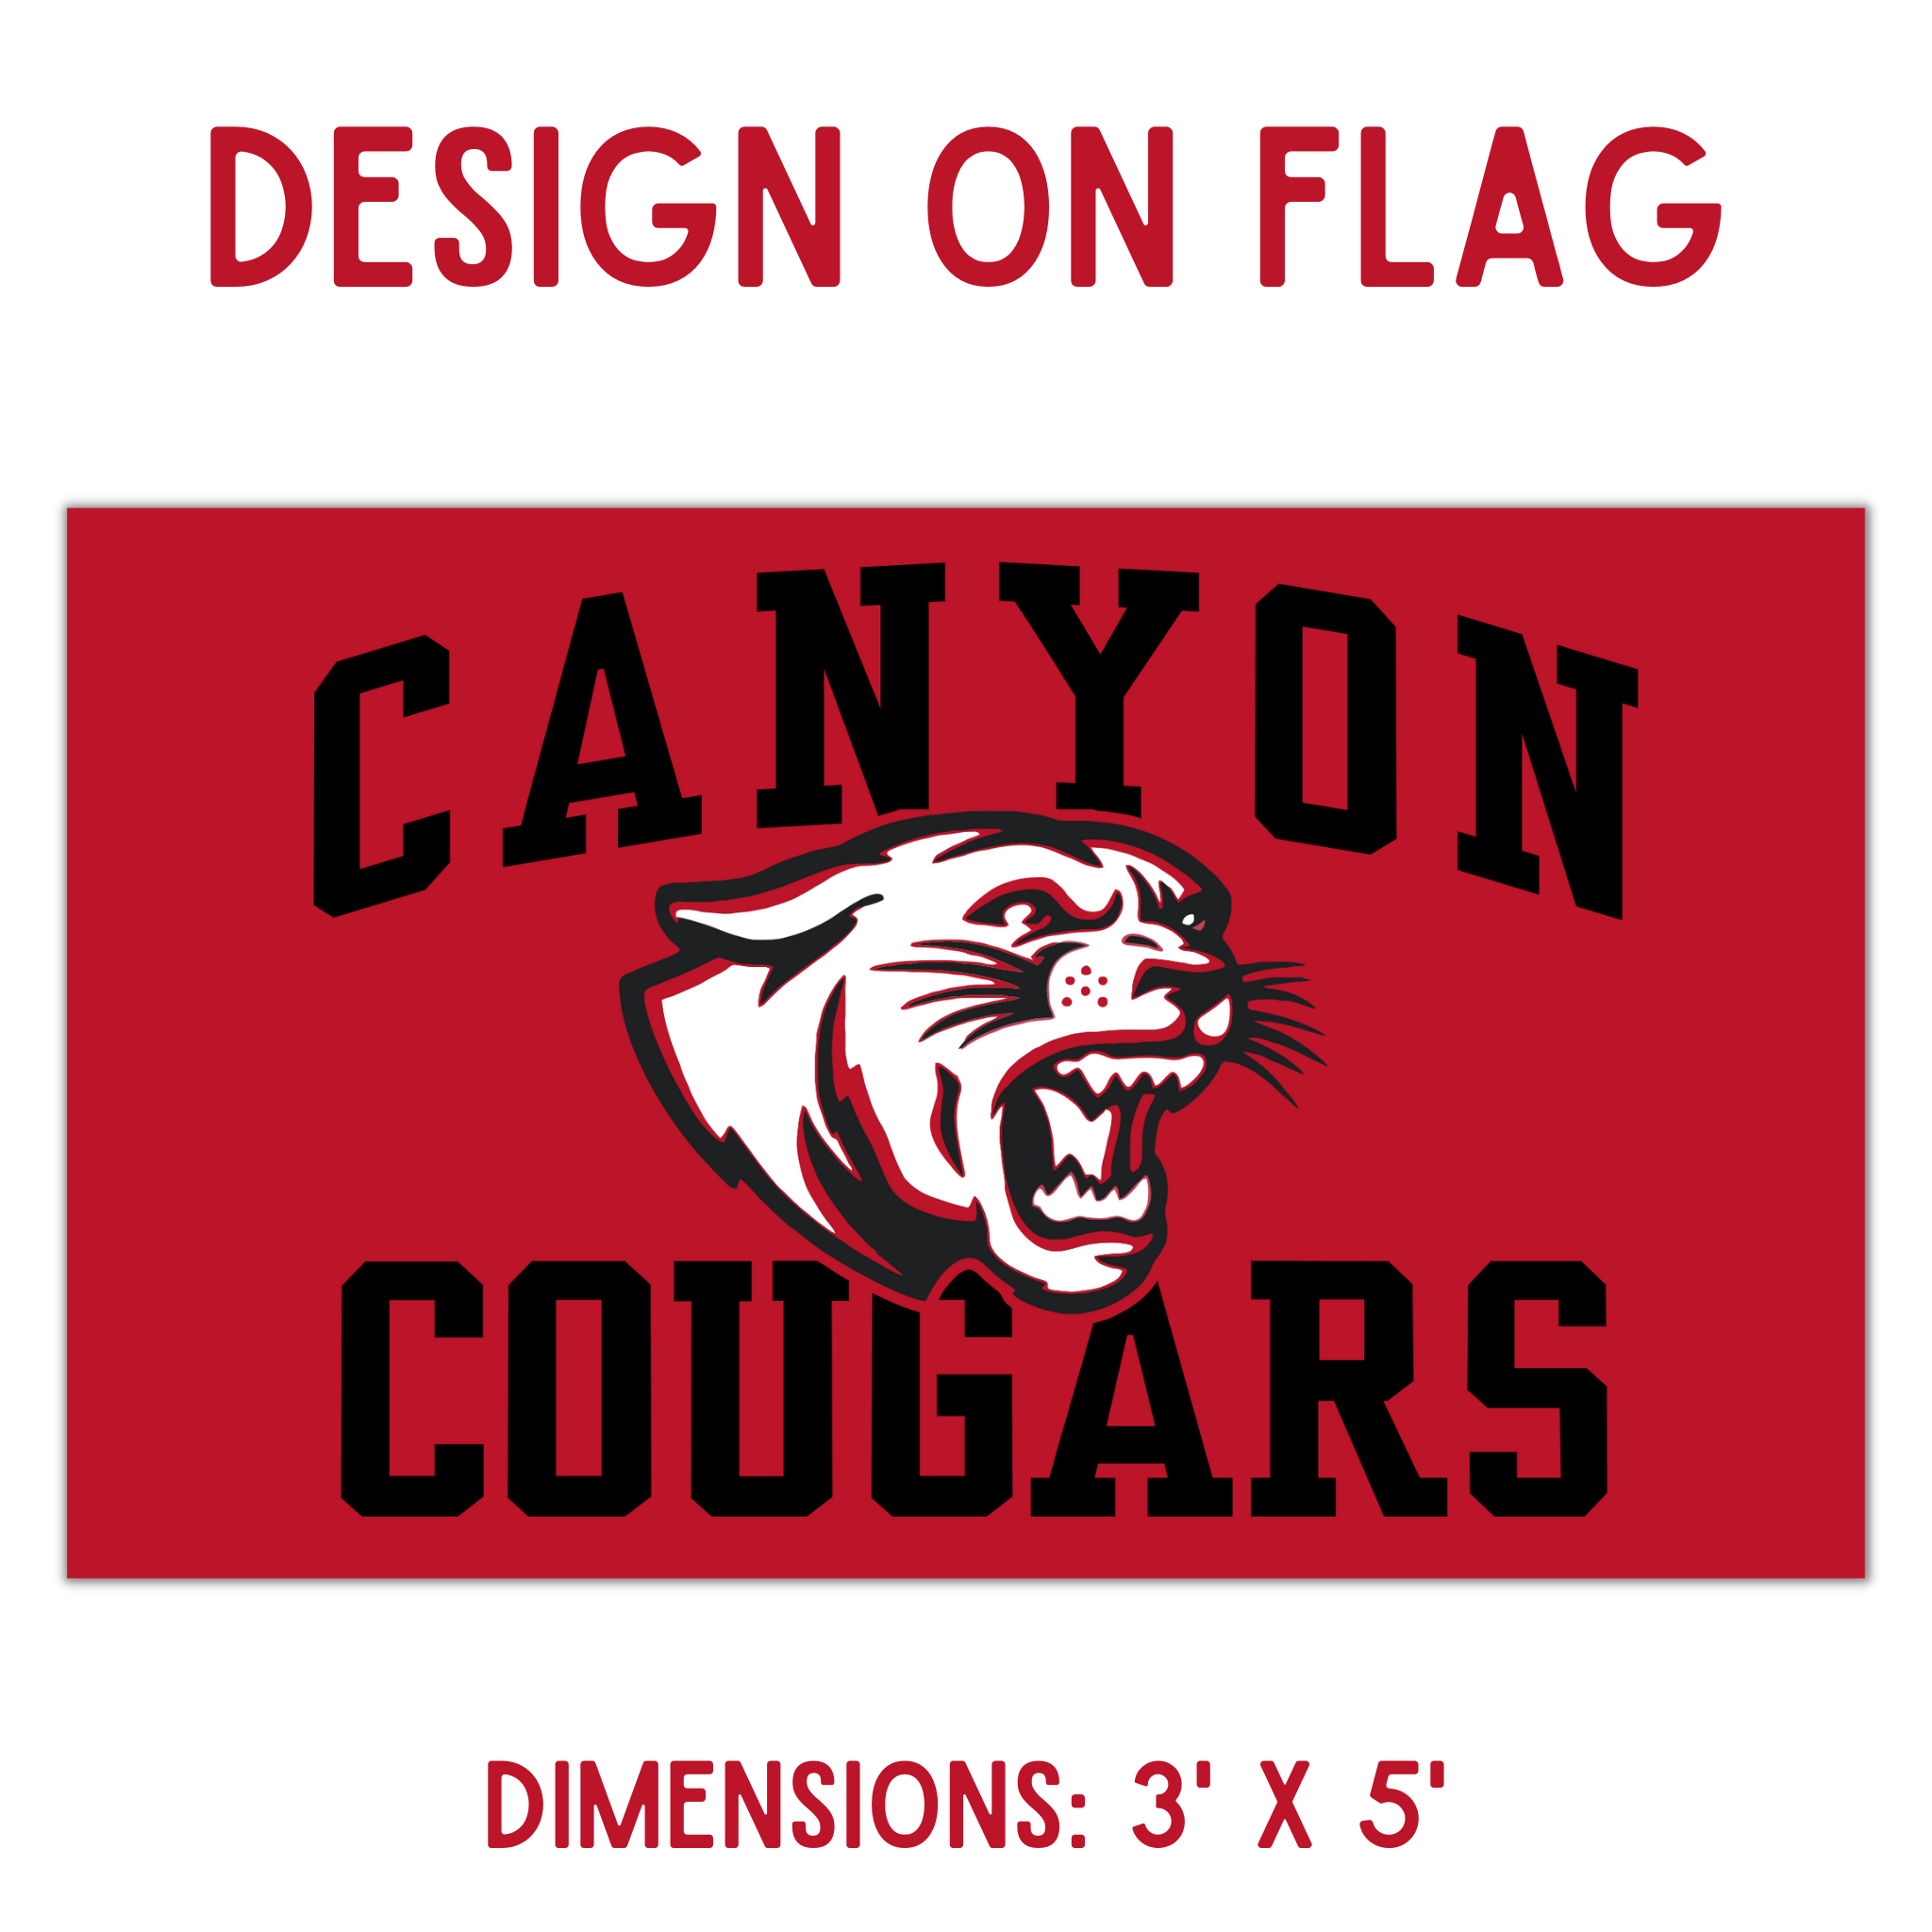 Canyon Cougars 3'x5' Flag